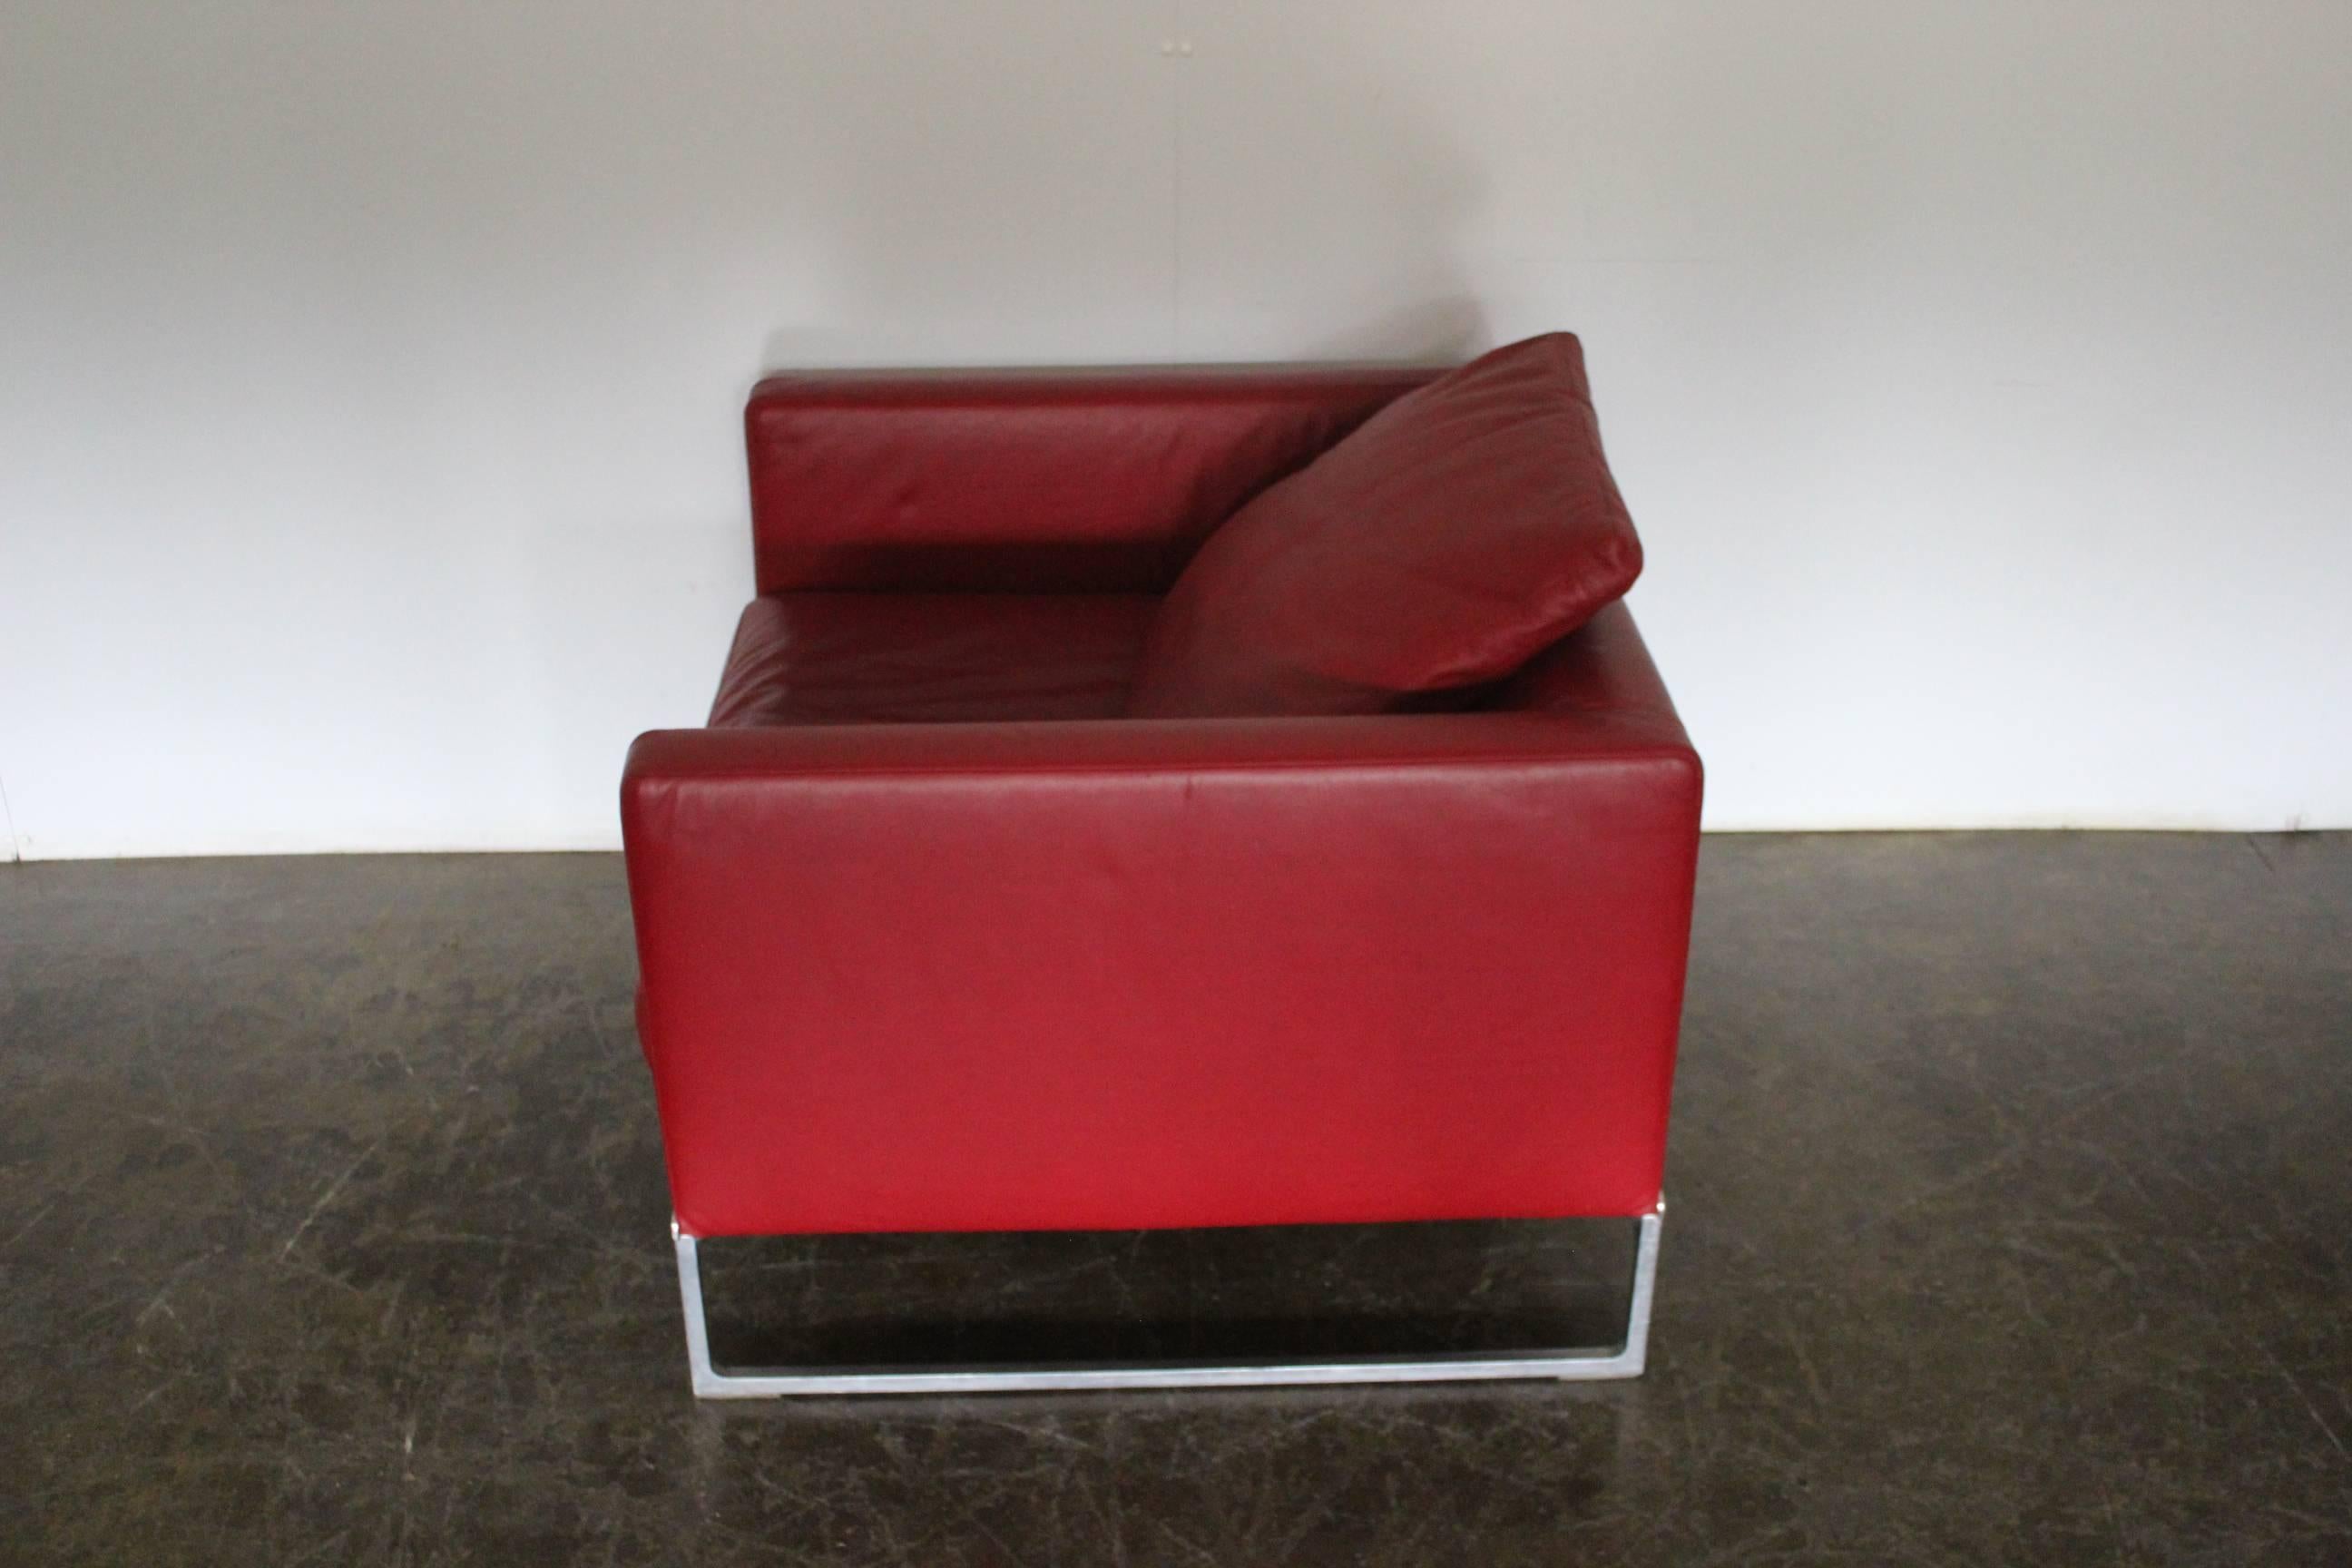 B&B Italia “Tight” Large Armchair in “Gamma” Red Leather 2